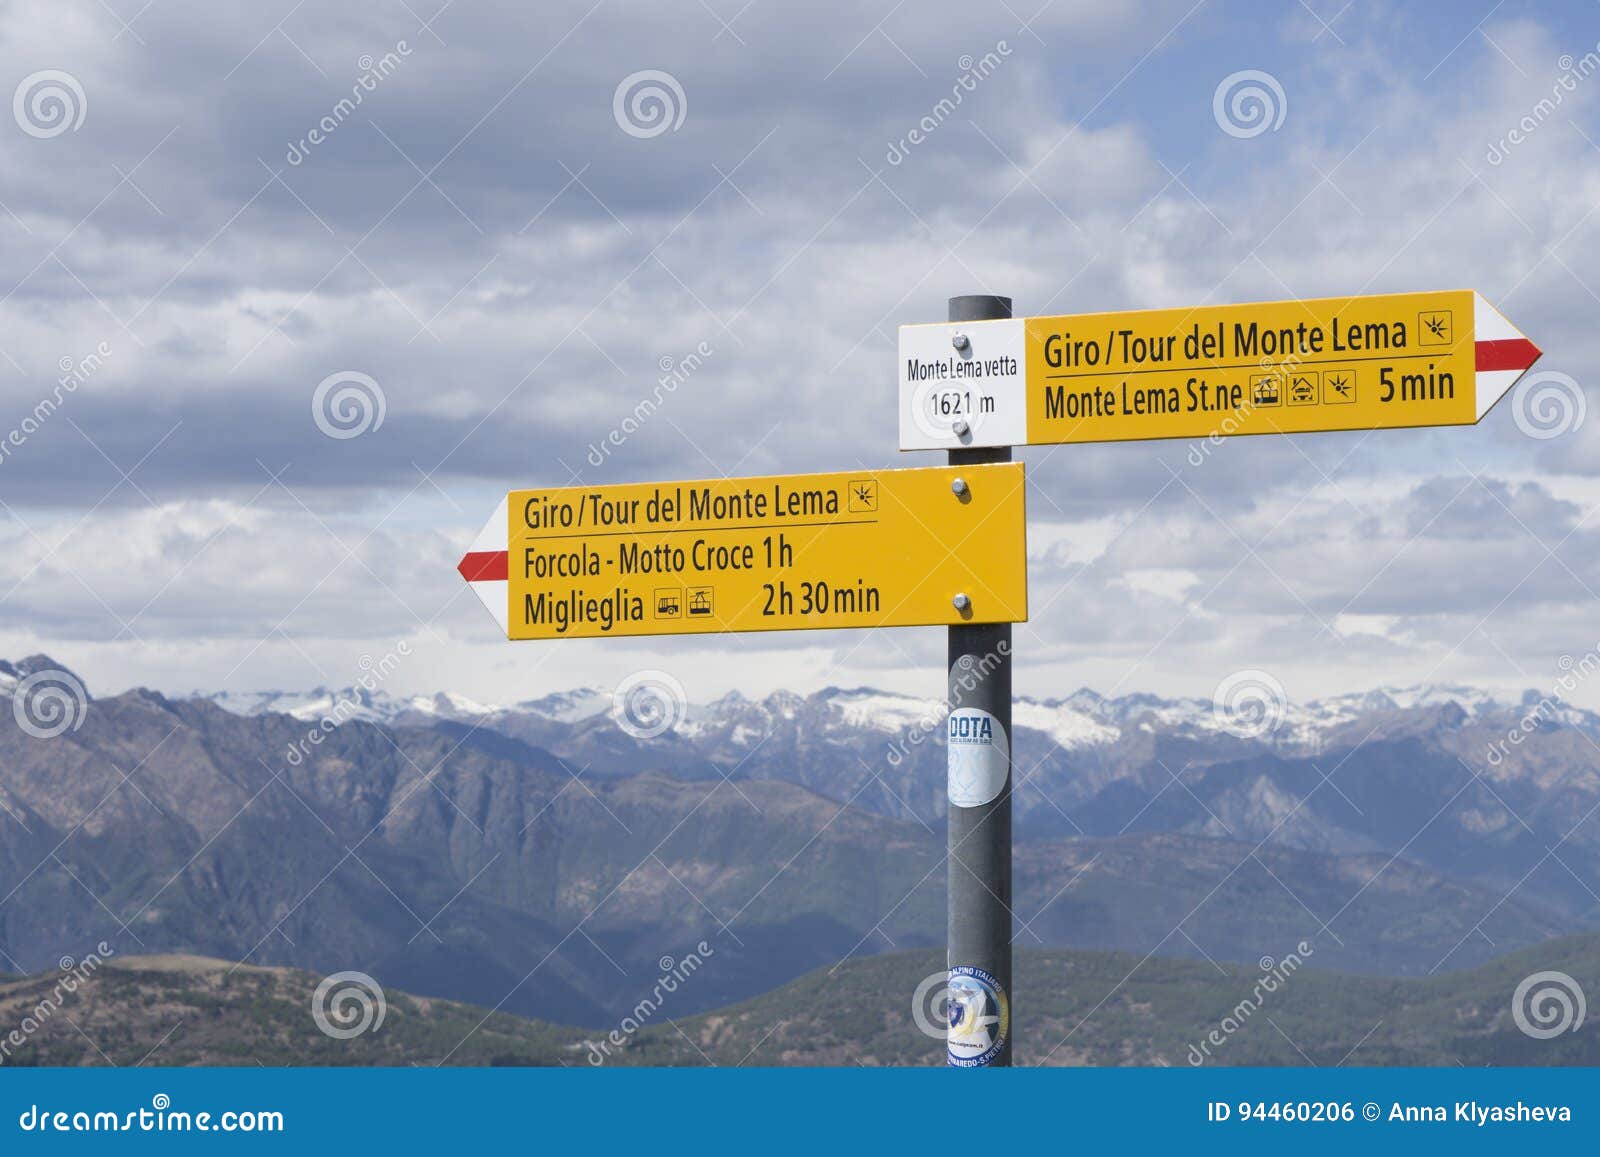 pointer on the monte lema mountain switzerland